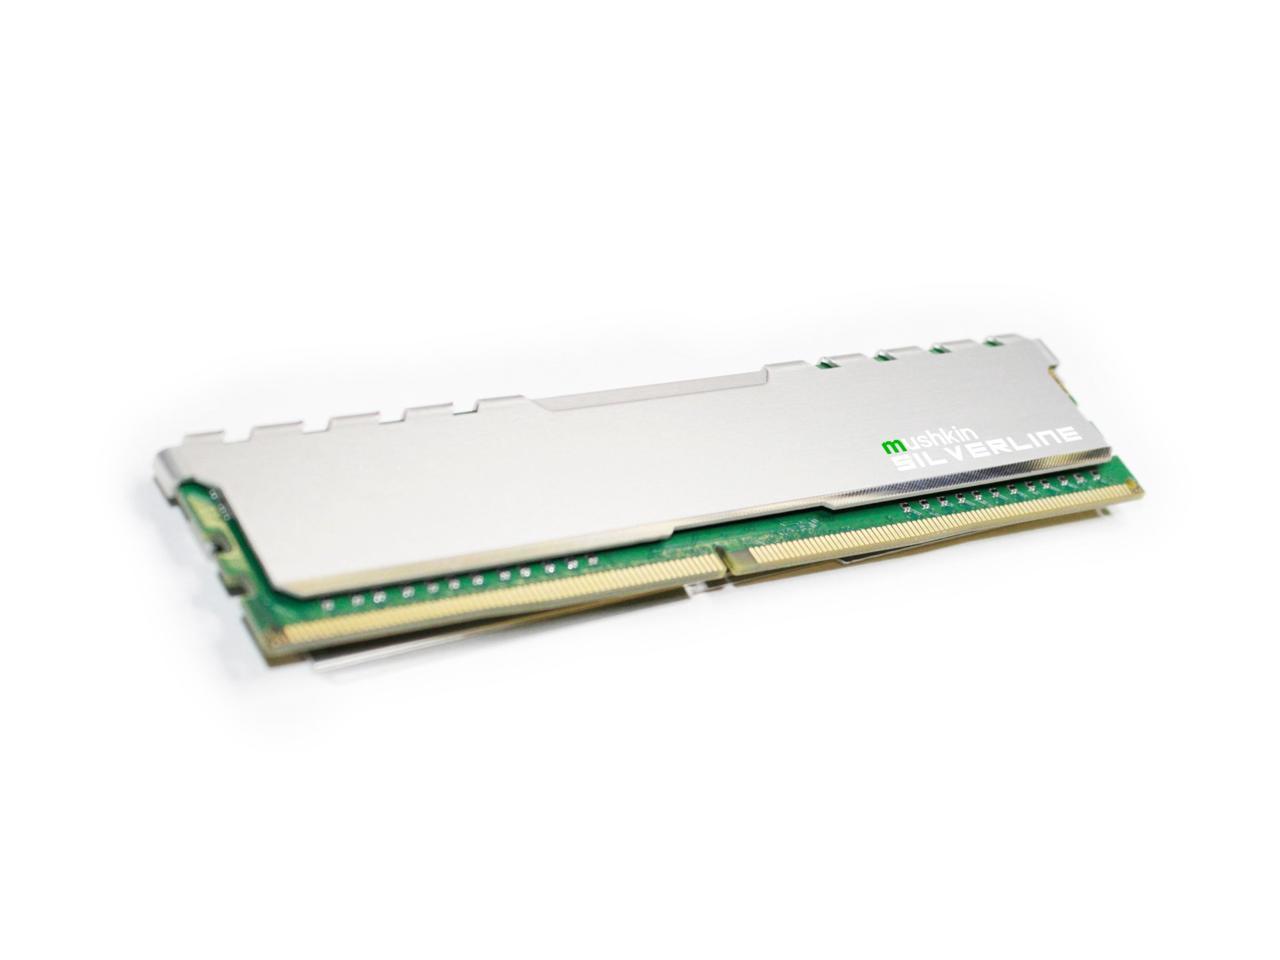 Mushkin Silverline 8GB (2X4GB) DDR4 PC4-17000 2133MHz 288-pin Desktop Memory Model MSL4U213FF4GX2